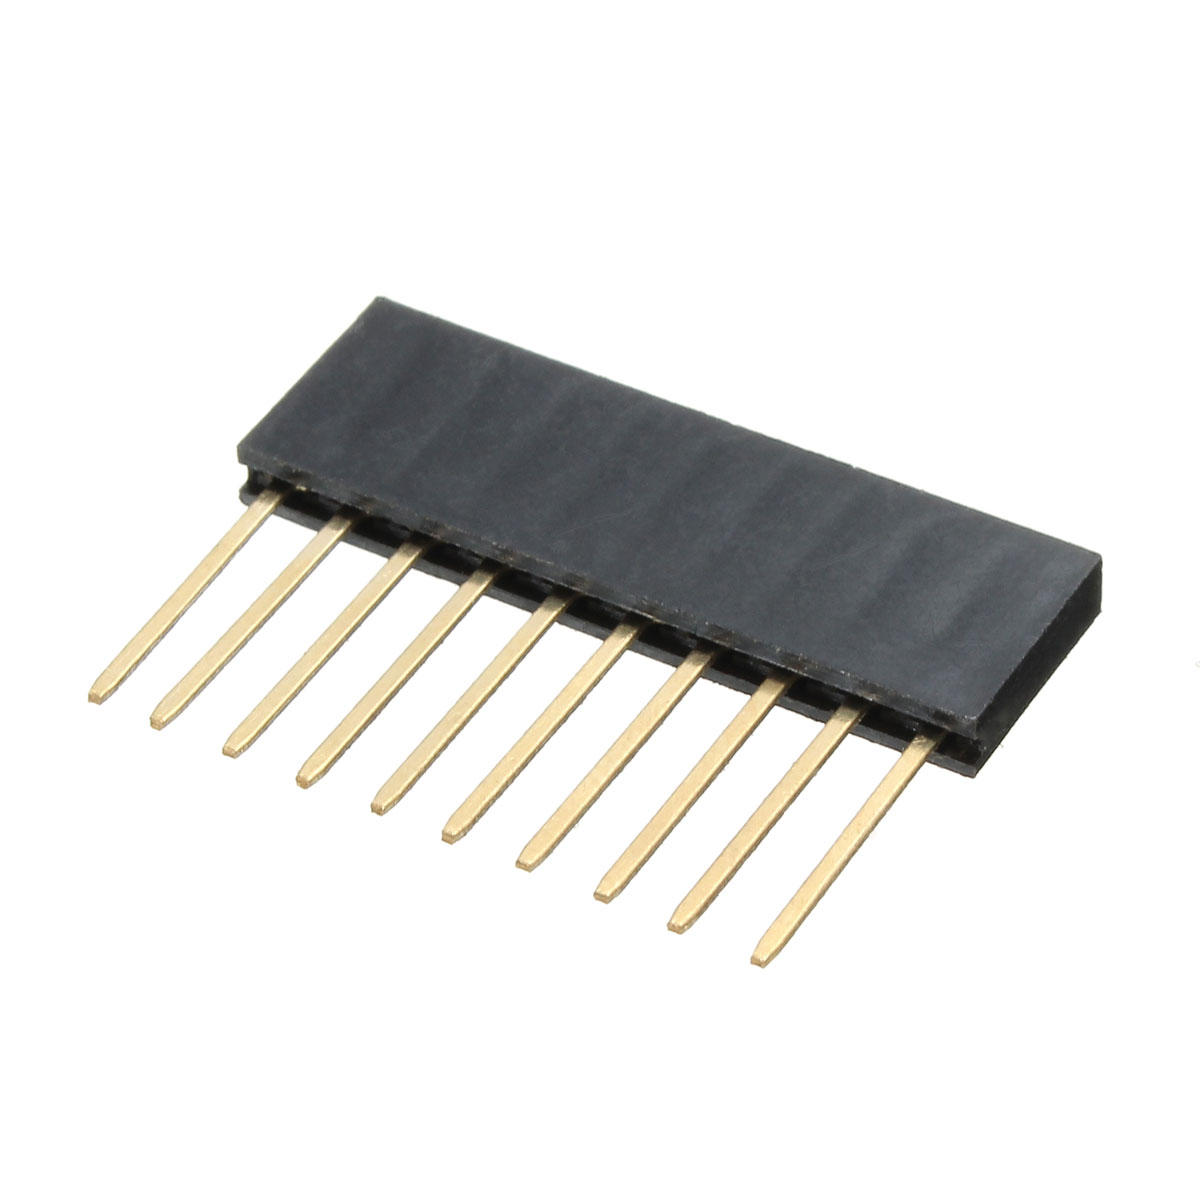 5pcs 40Pin 2.54mm Female Header Connector Socket For DIY Arduino